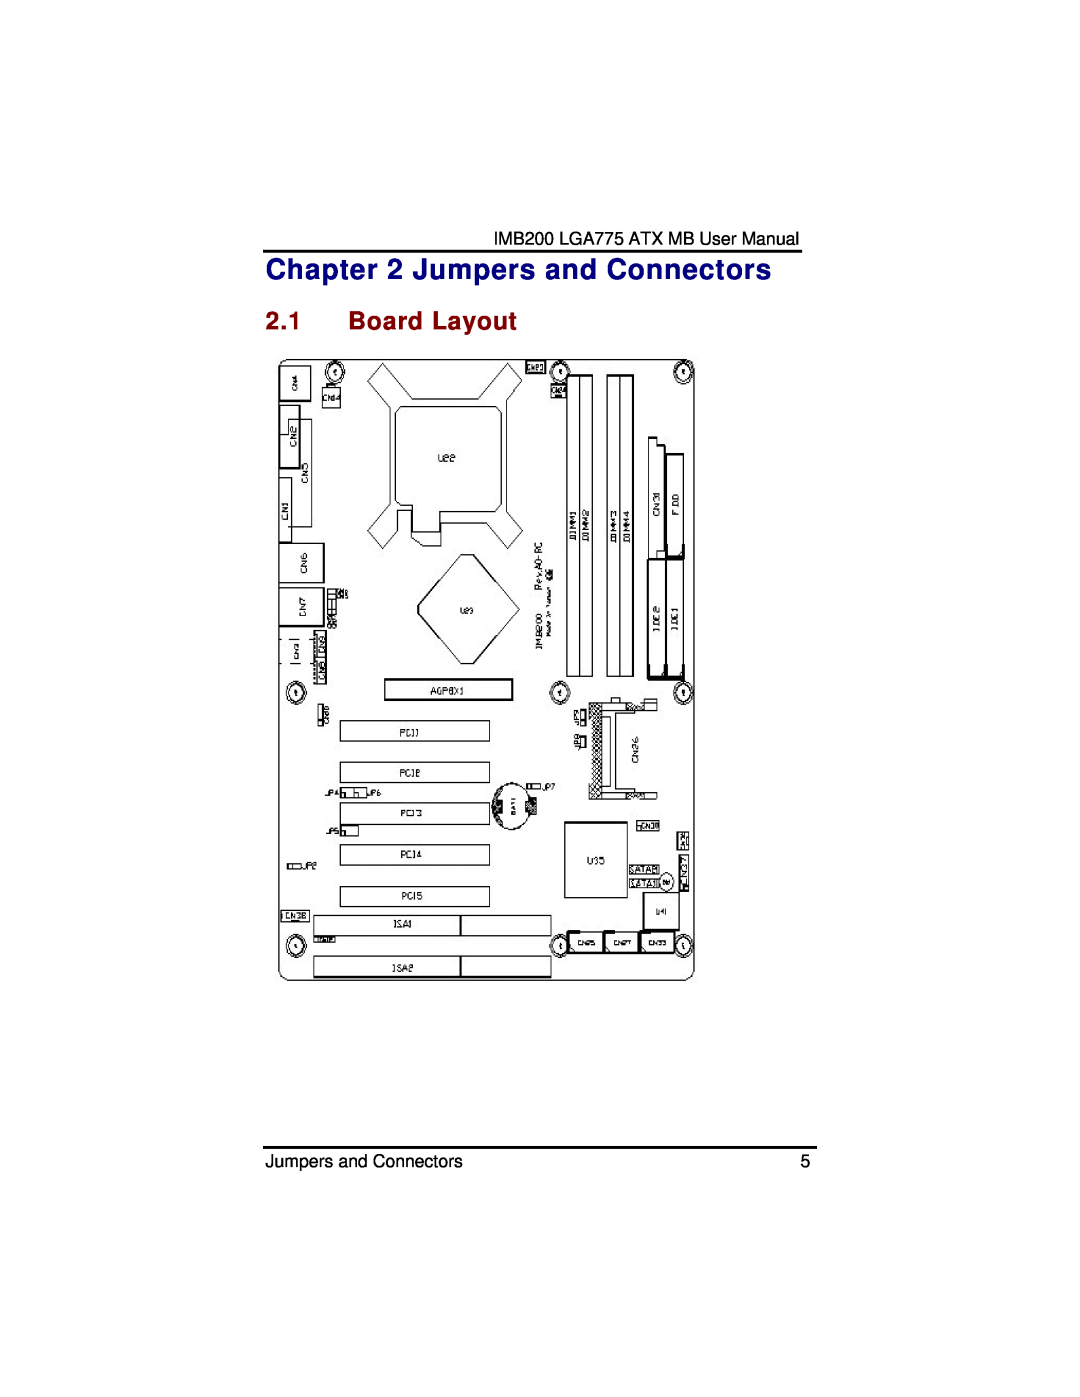 Intel IMB200VGE user manual Jumpers and Connectors, Board Layout 